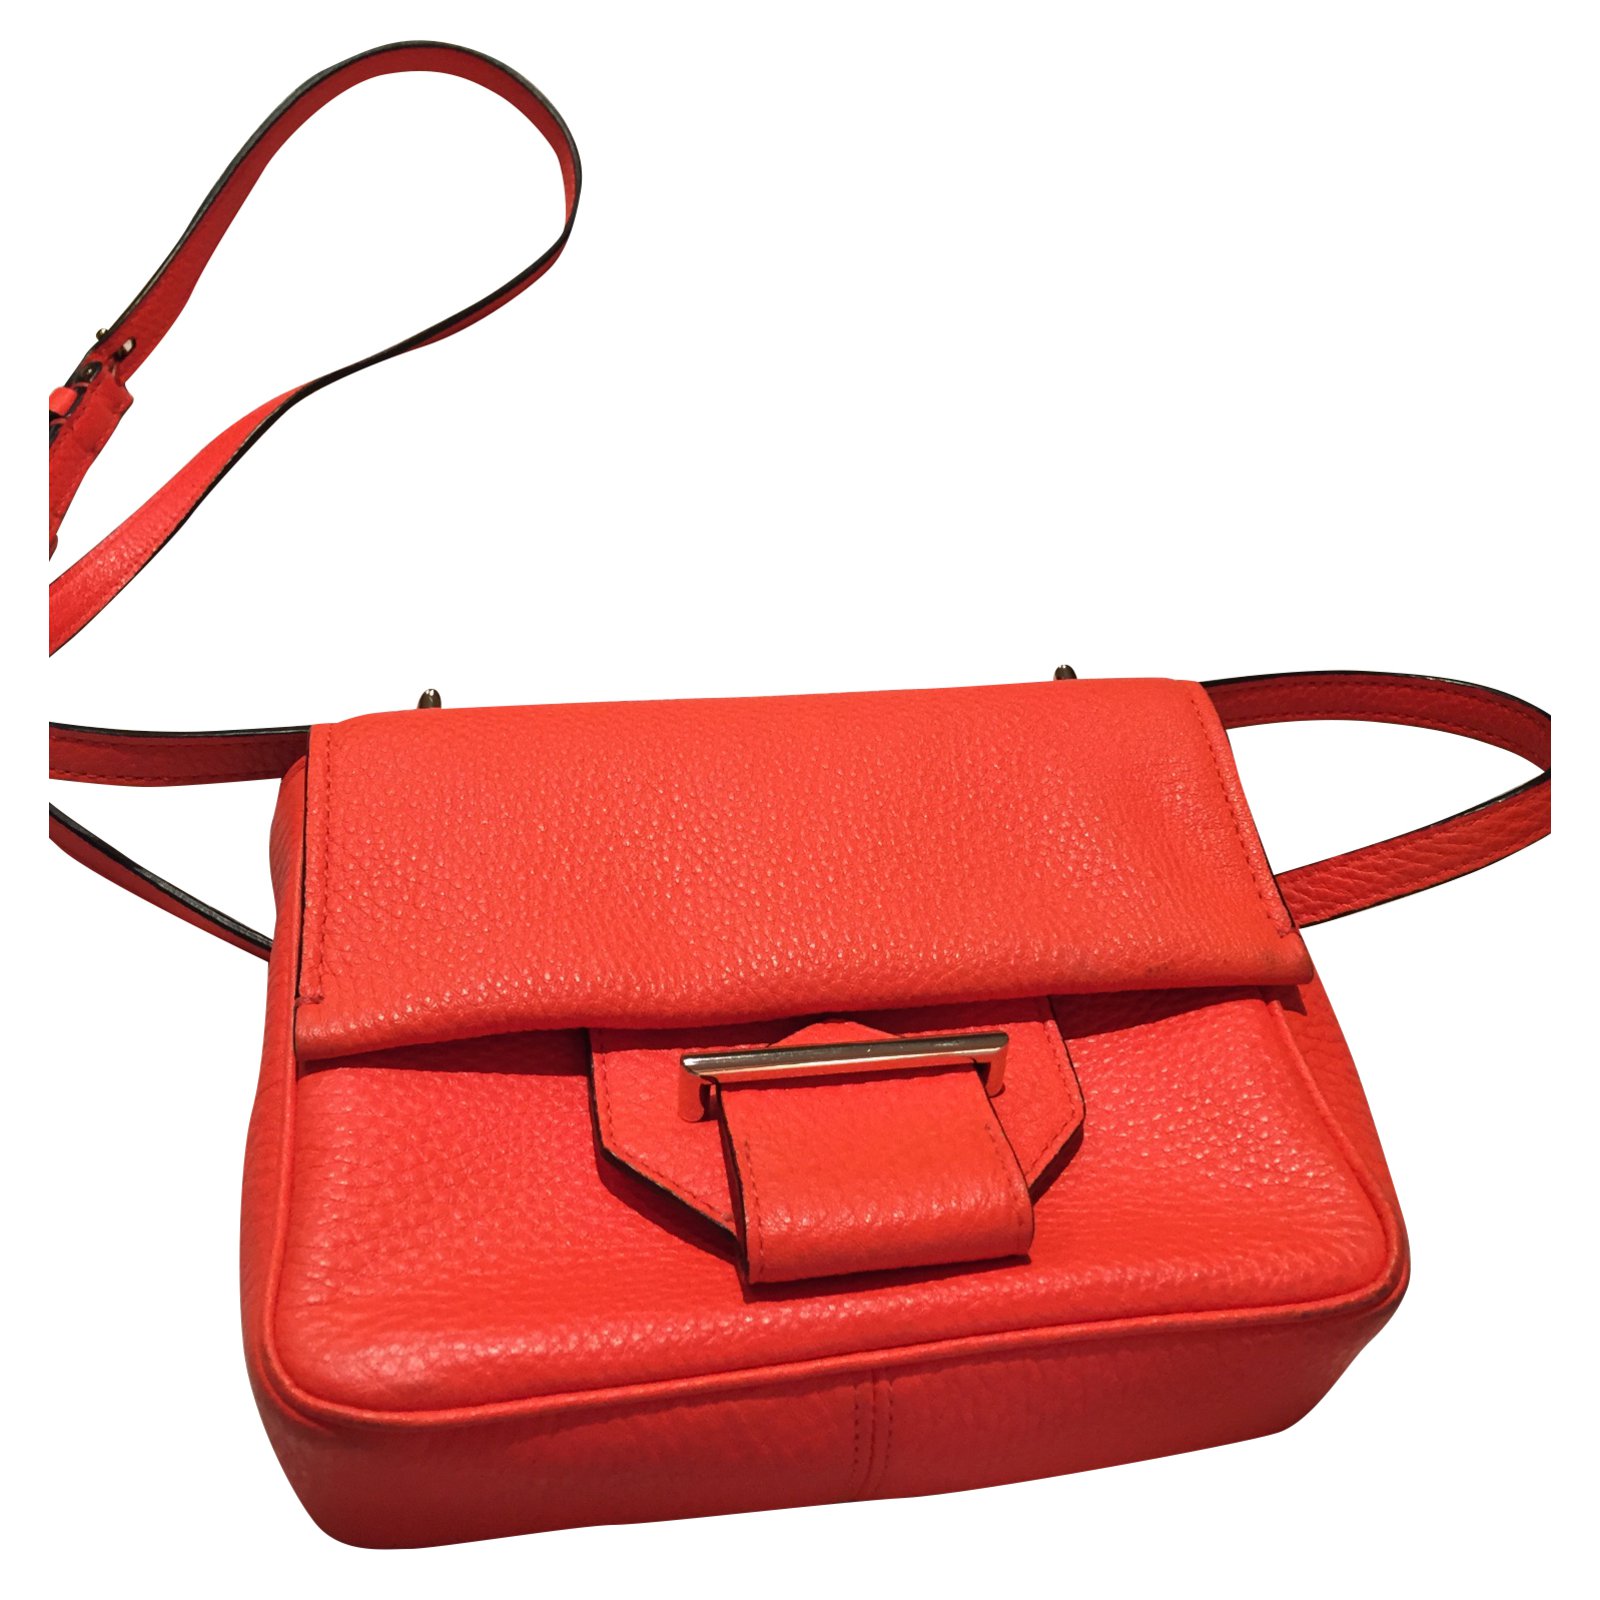 Bolsa rosa por Reed Krakoff | Bags, Leather satchel handbags, Chic bags